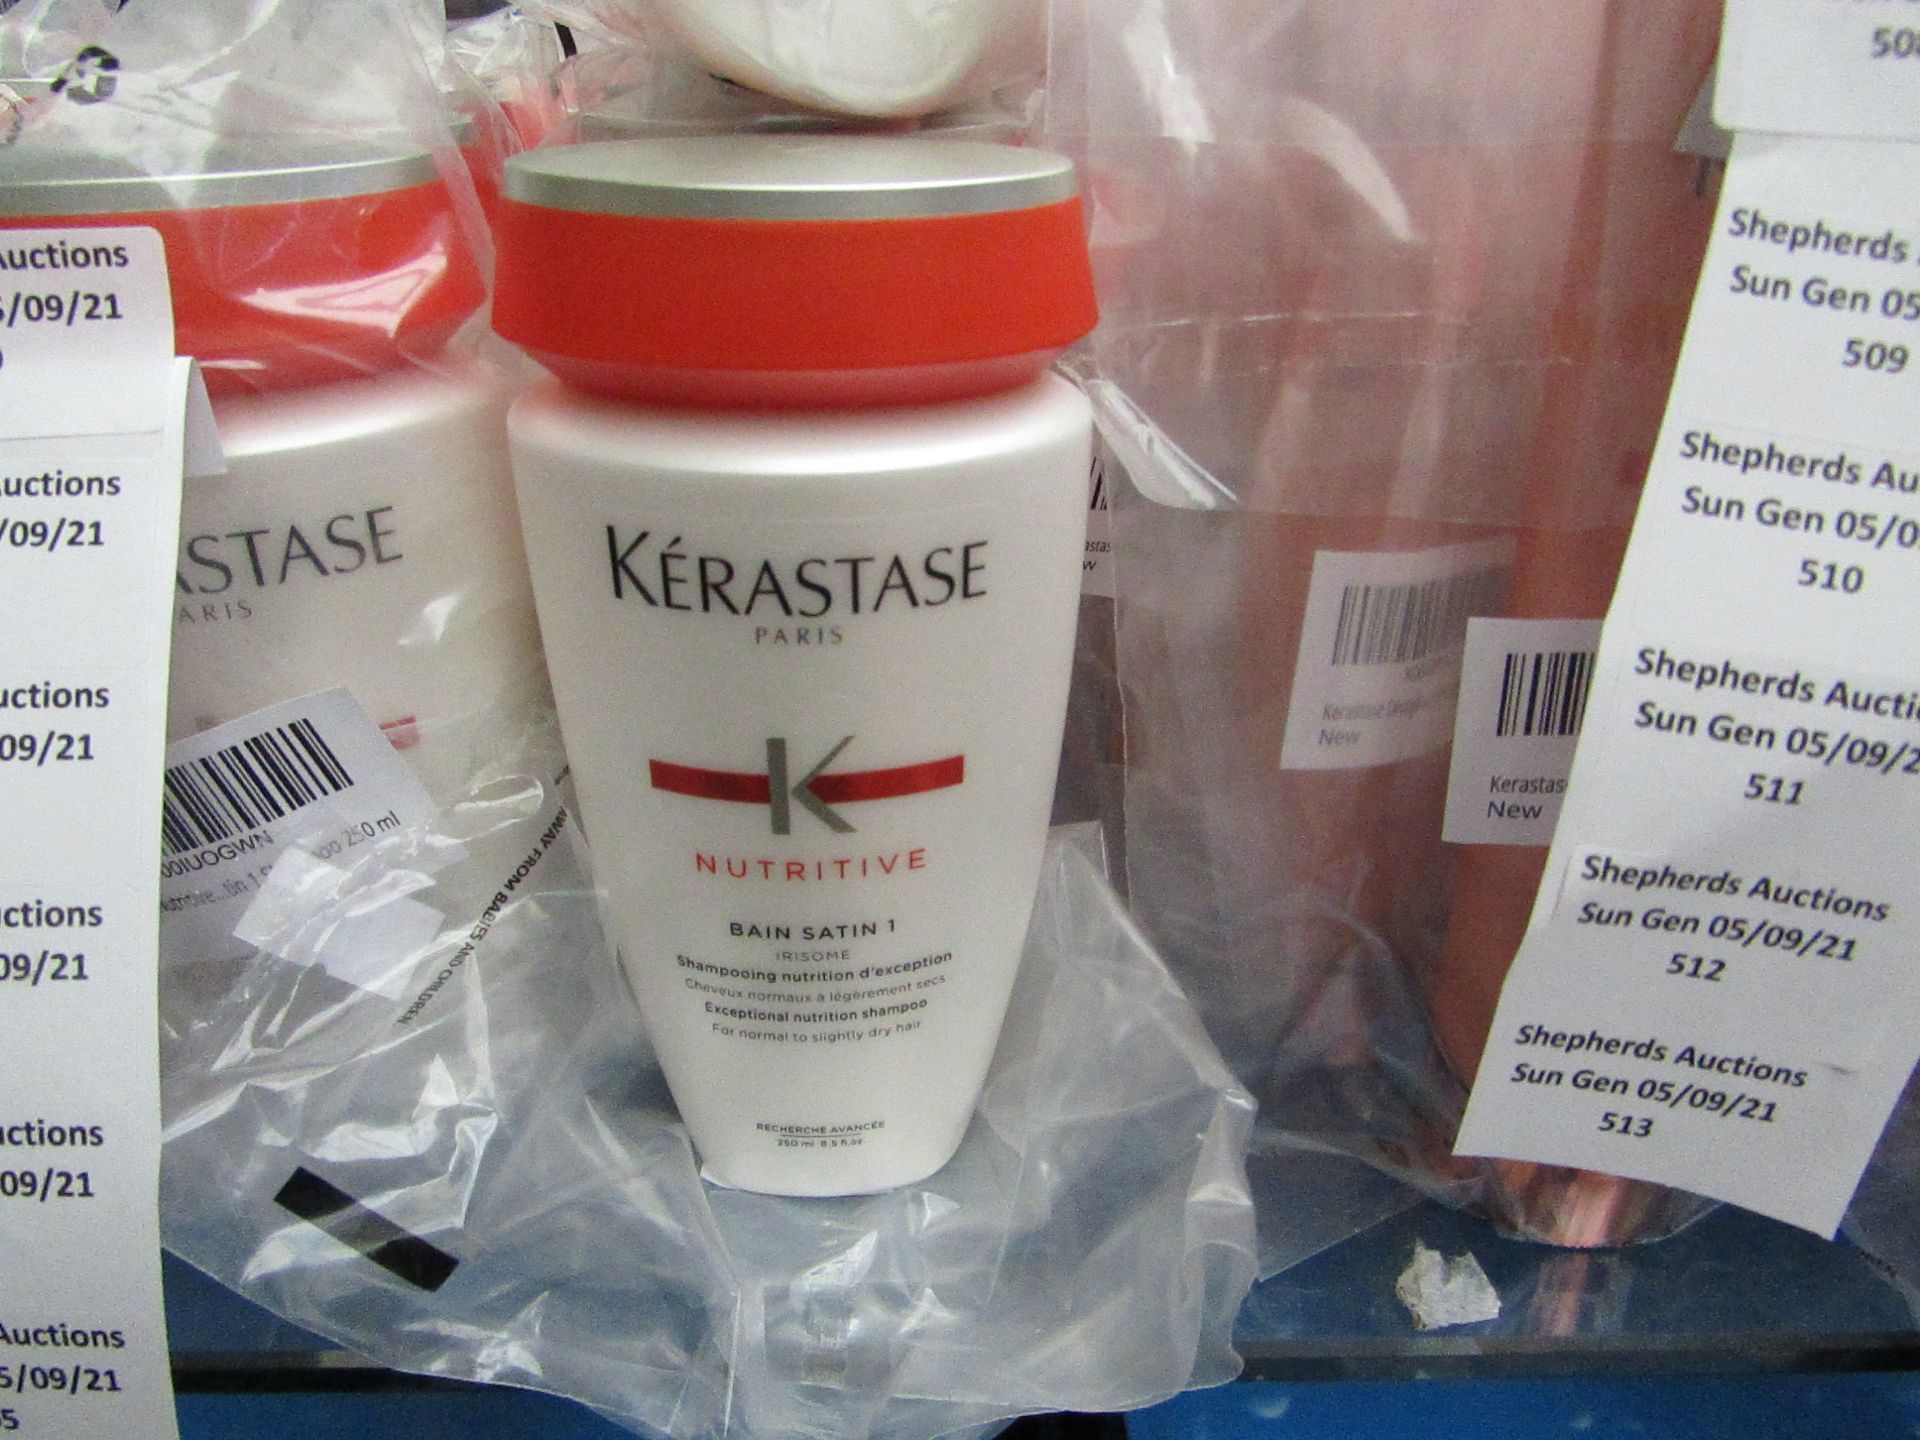 Kerastase - Paris Nutritive Bain Satin 1 Shampoo, 250ml - New & Packaged - RRP £21.10.